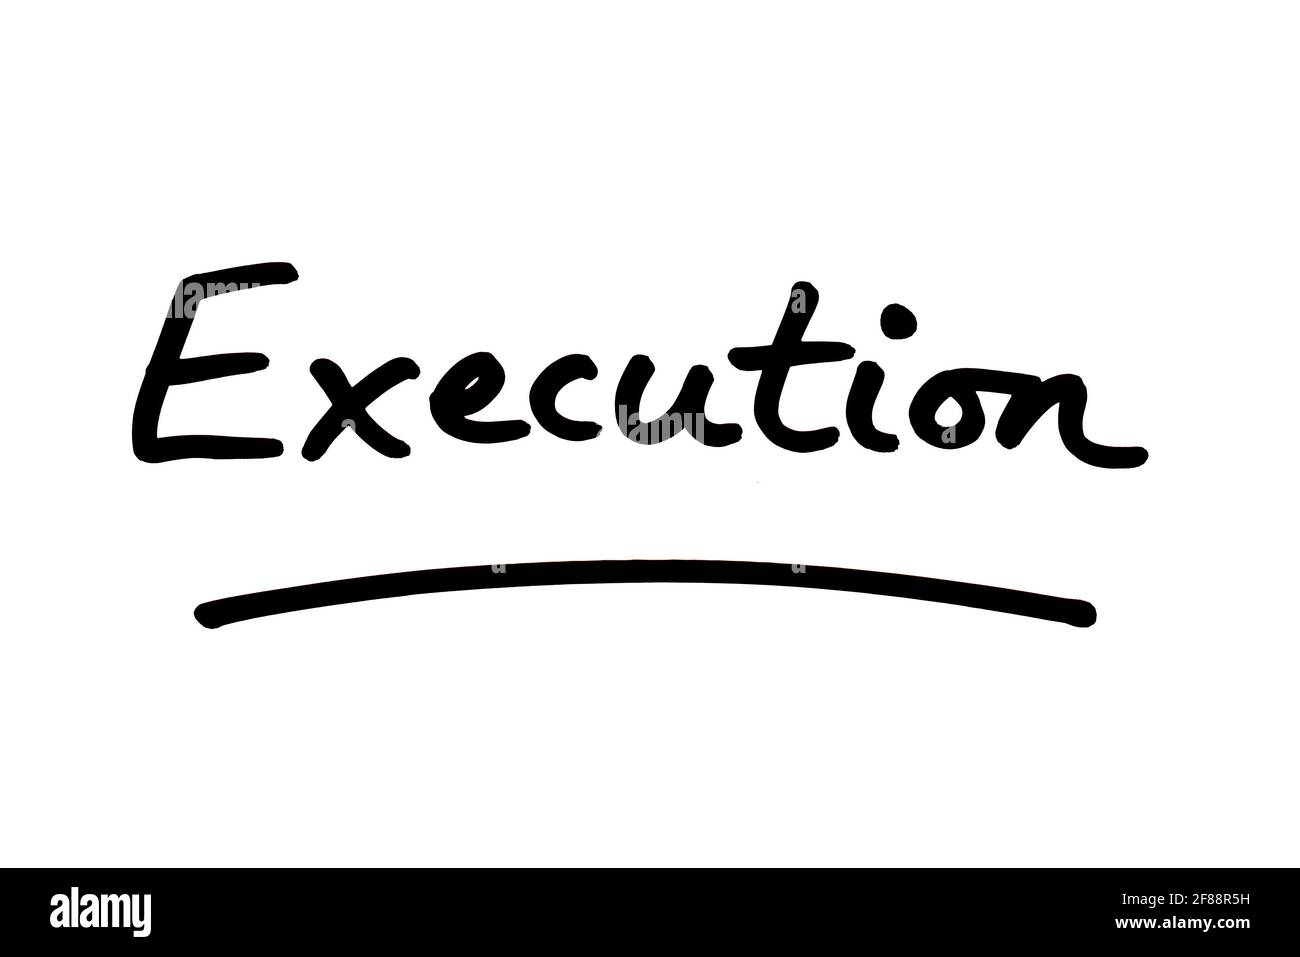 Execution, handwritten on a white background. Stock Photo